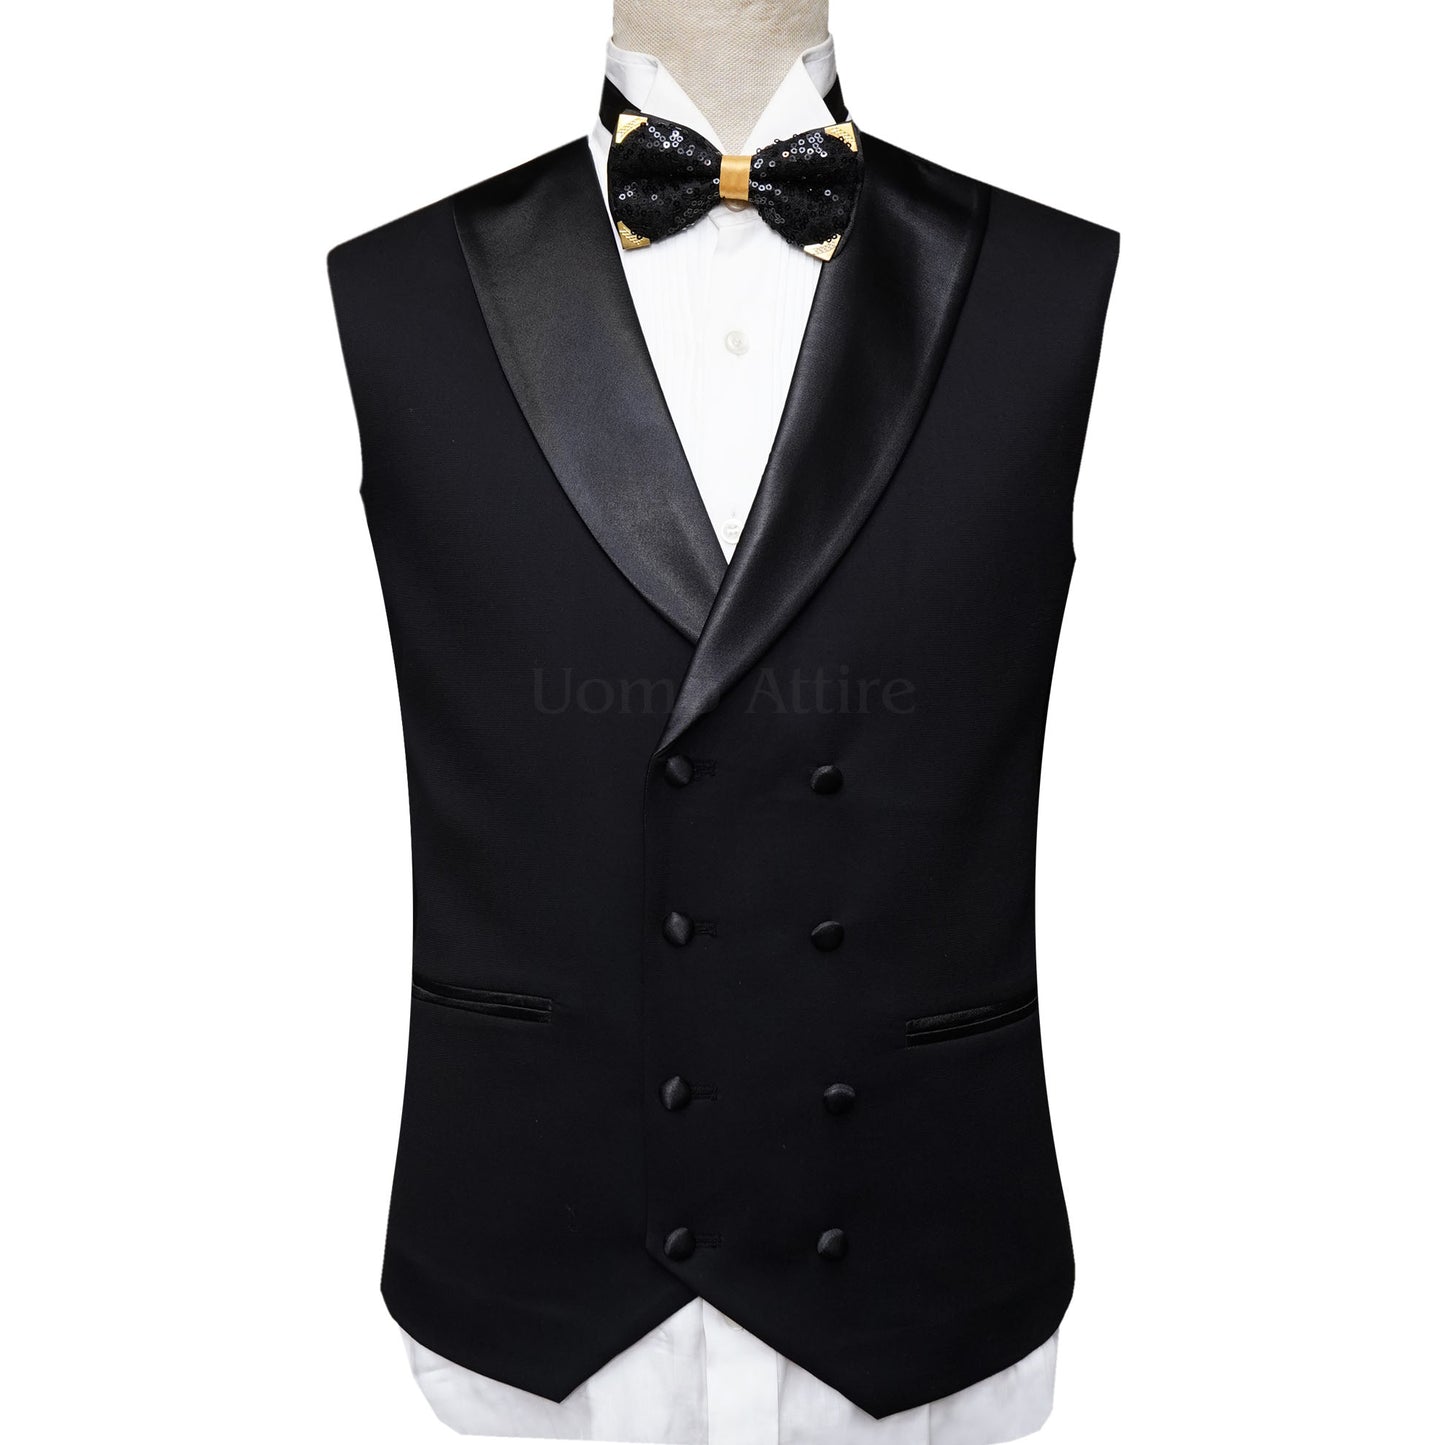 Men's Luxury Bespoke Embellished Black Velvet Tuxedo 3 Piece Suit with double breasted vest